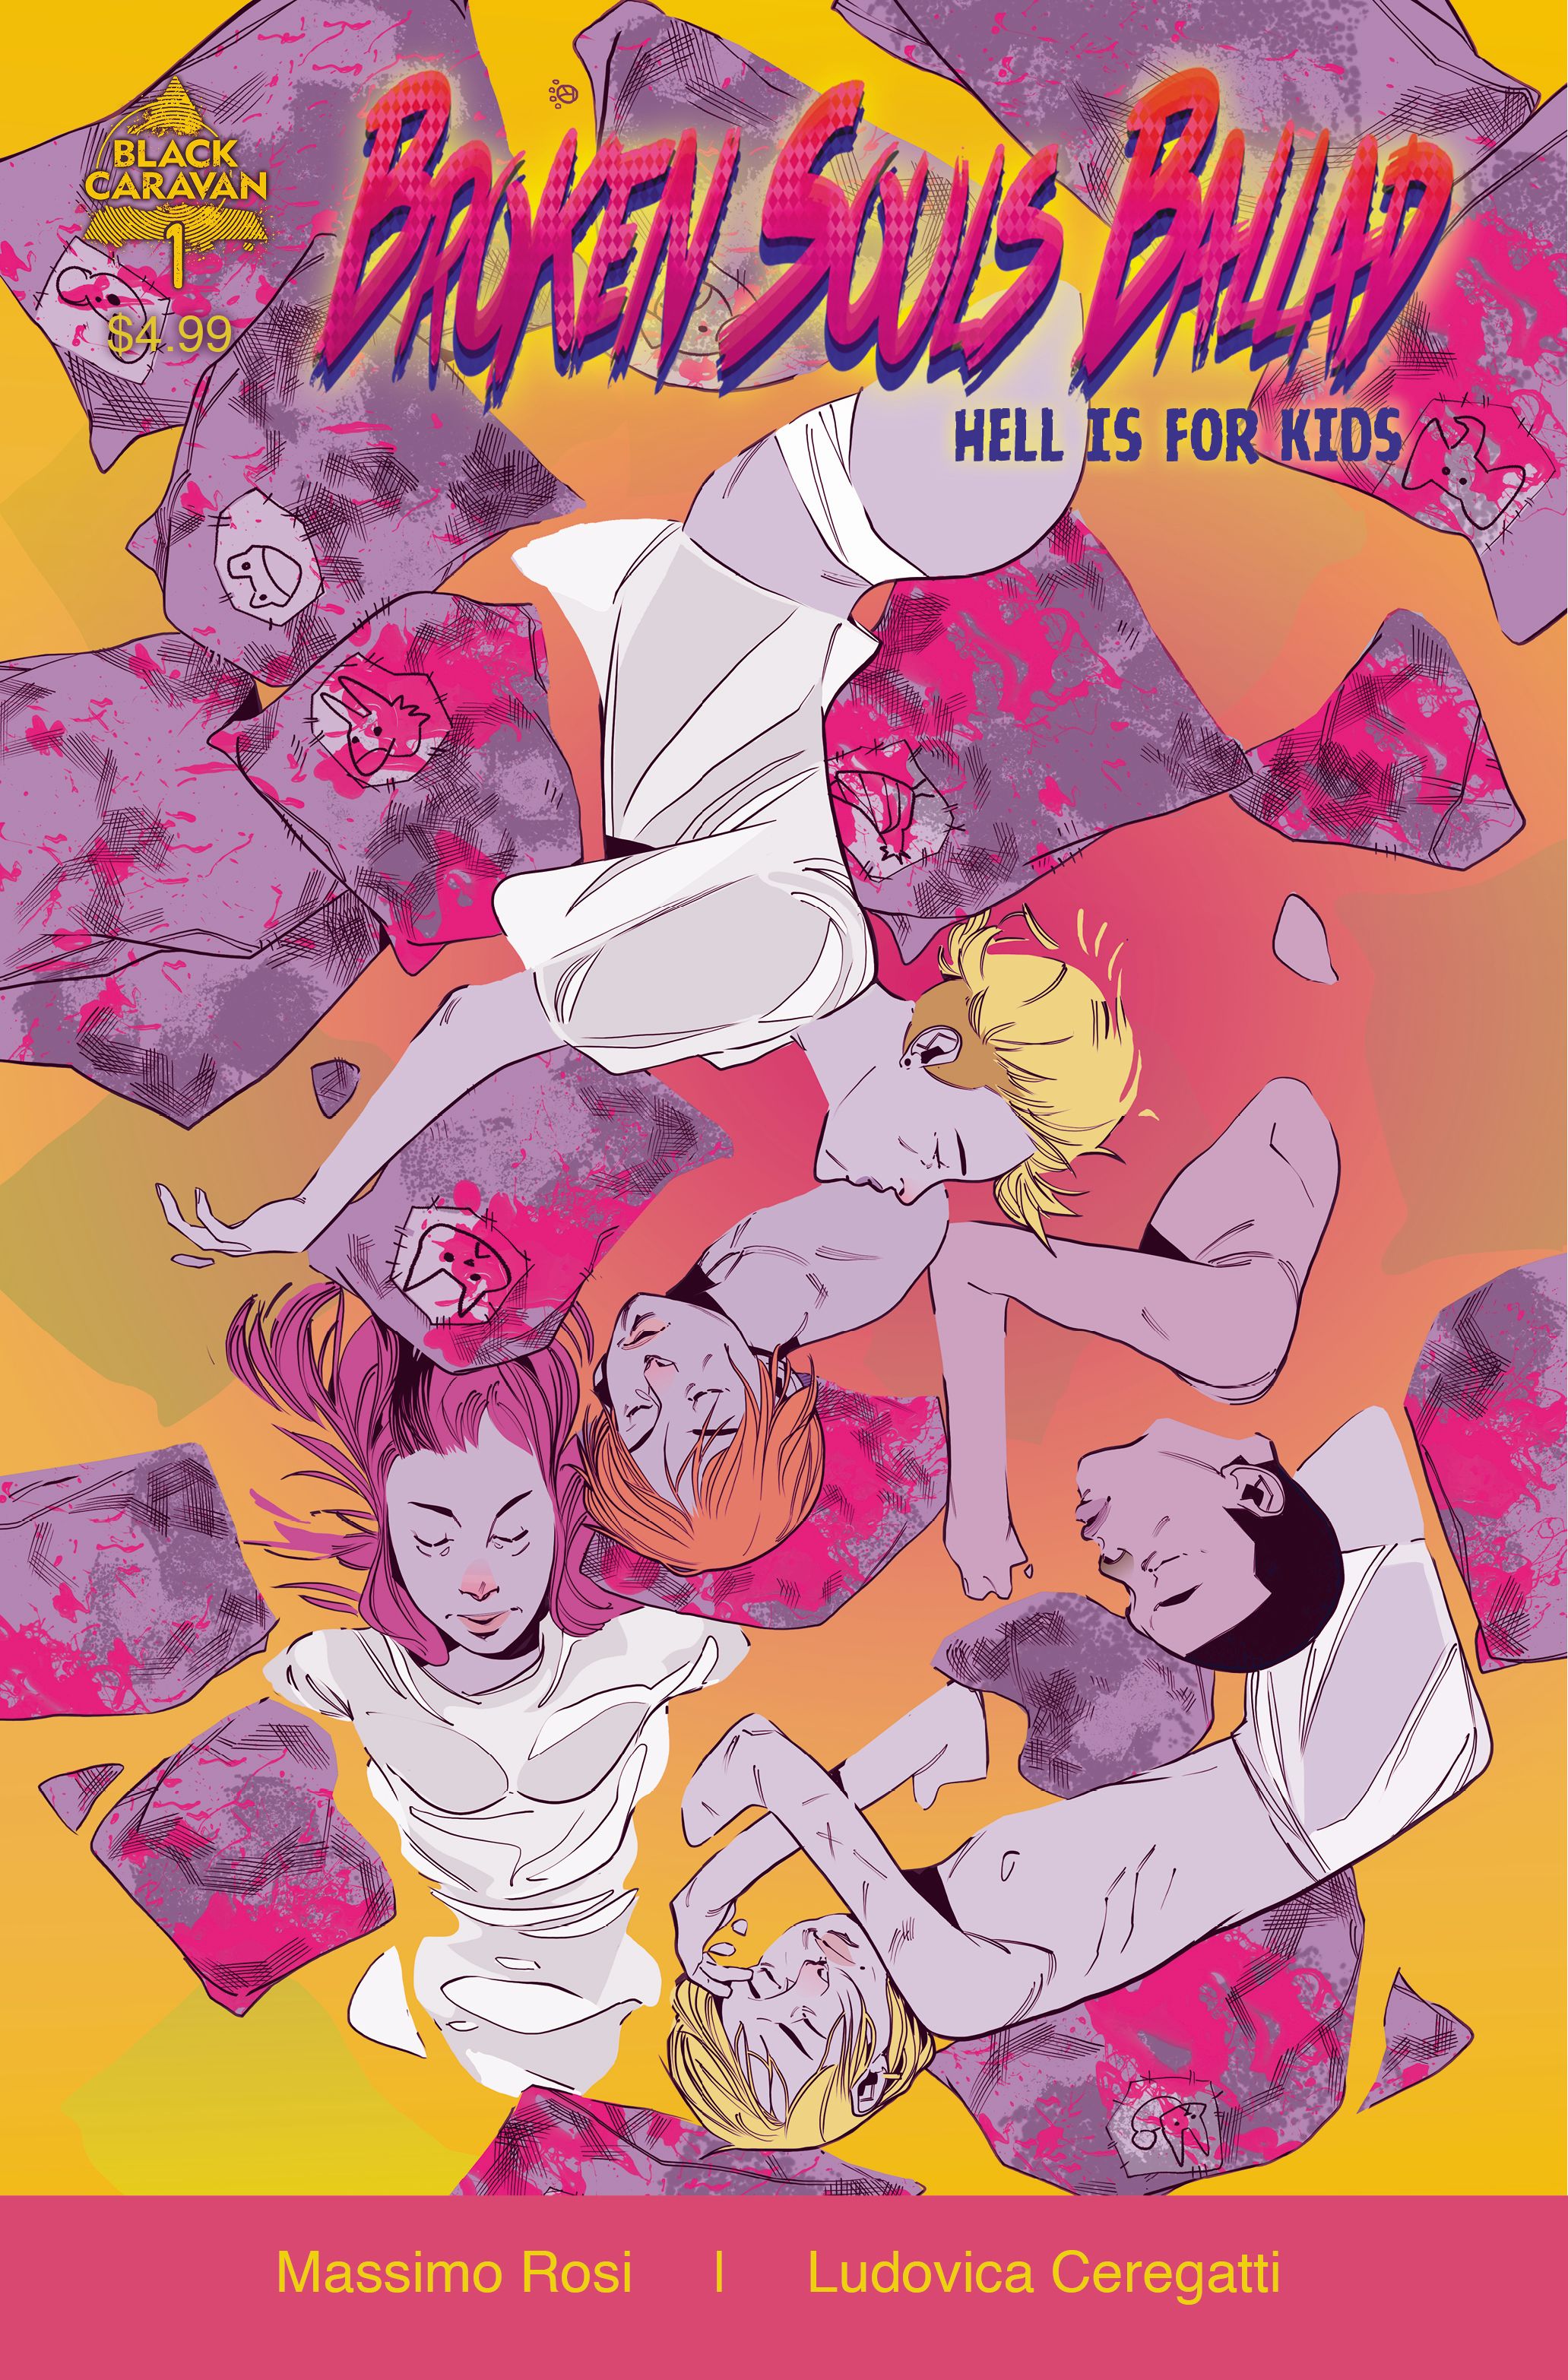 Broken Souls Ballad: Hell is for Kids #1 Comic